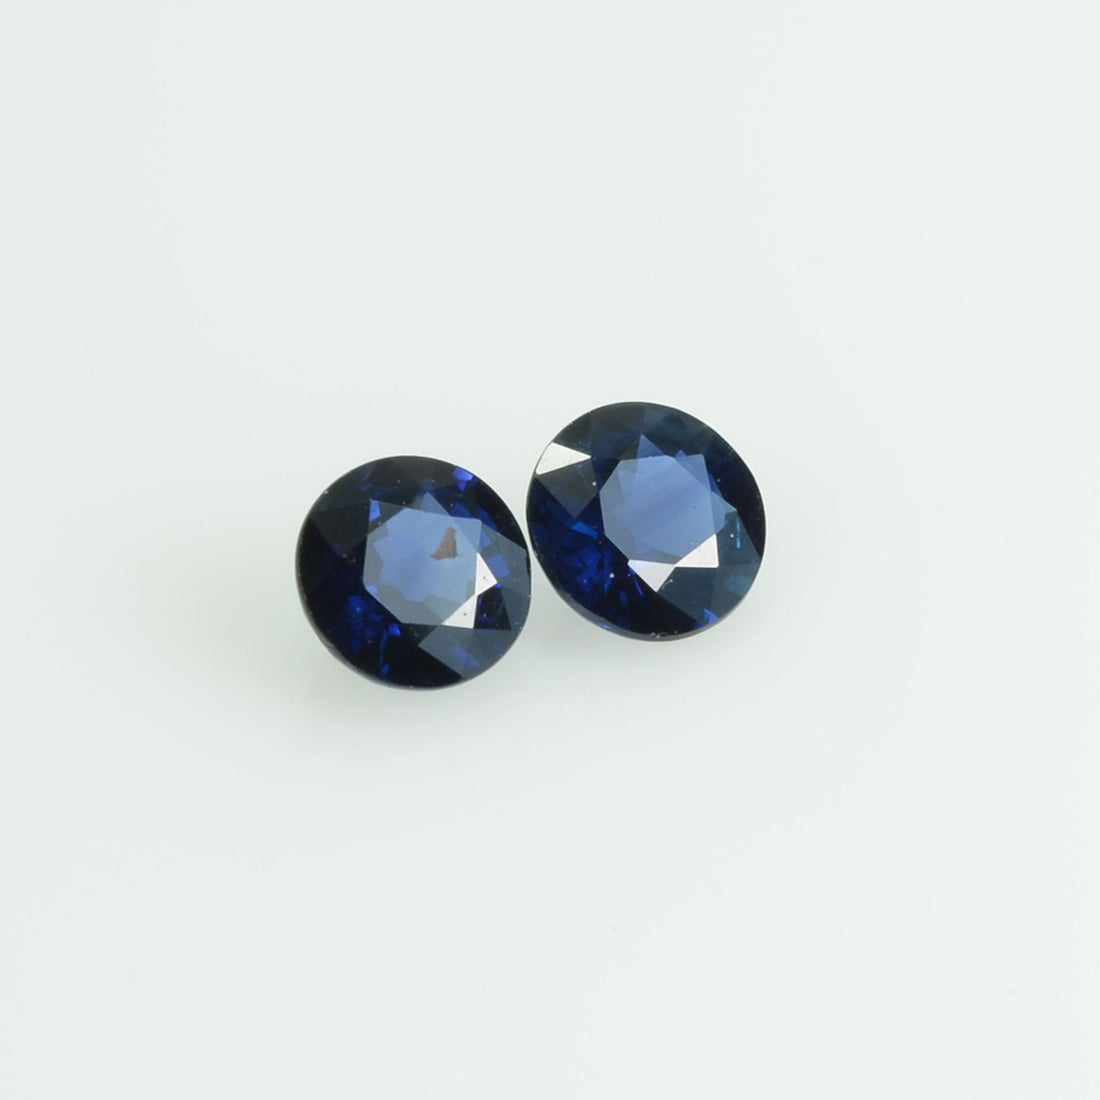 4.3 mm Natural Blue Sapphire Loose Gemstone Round Cut